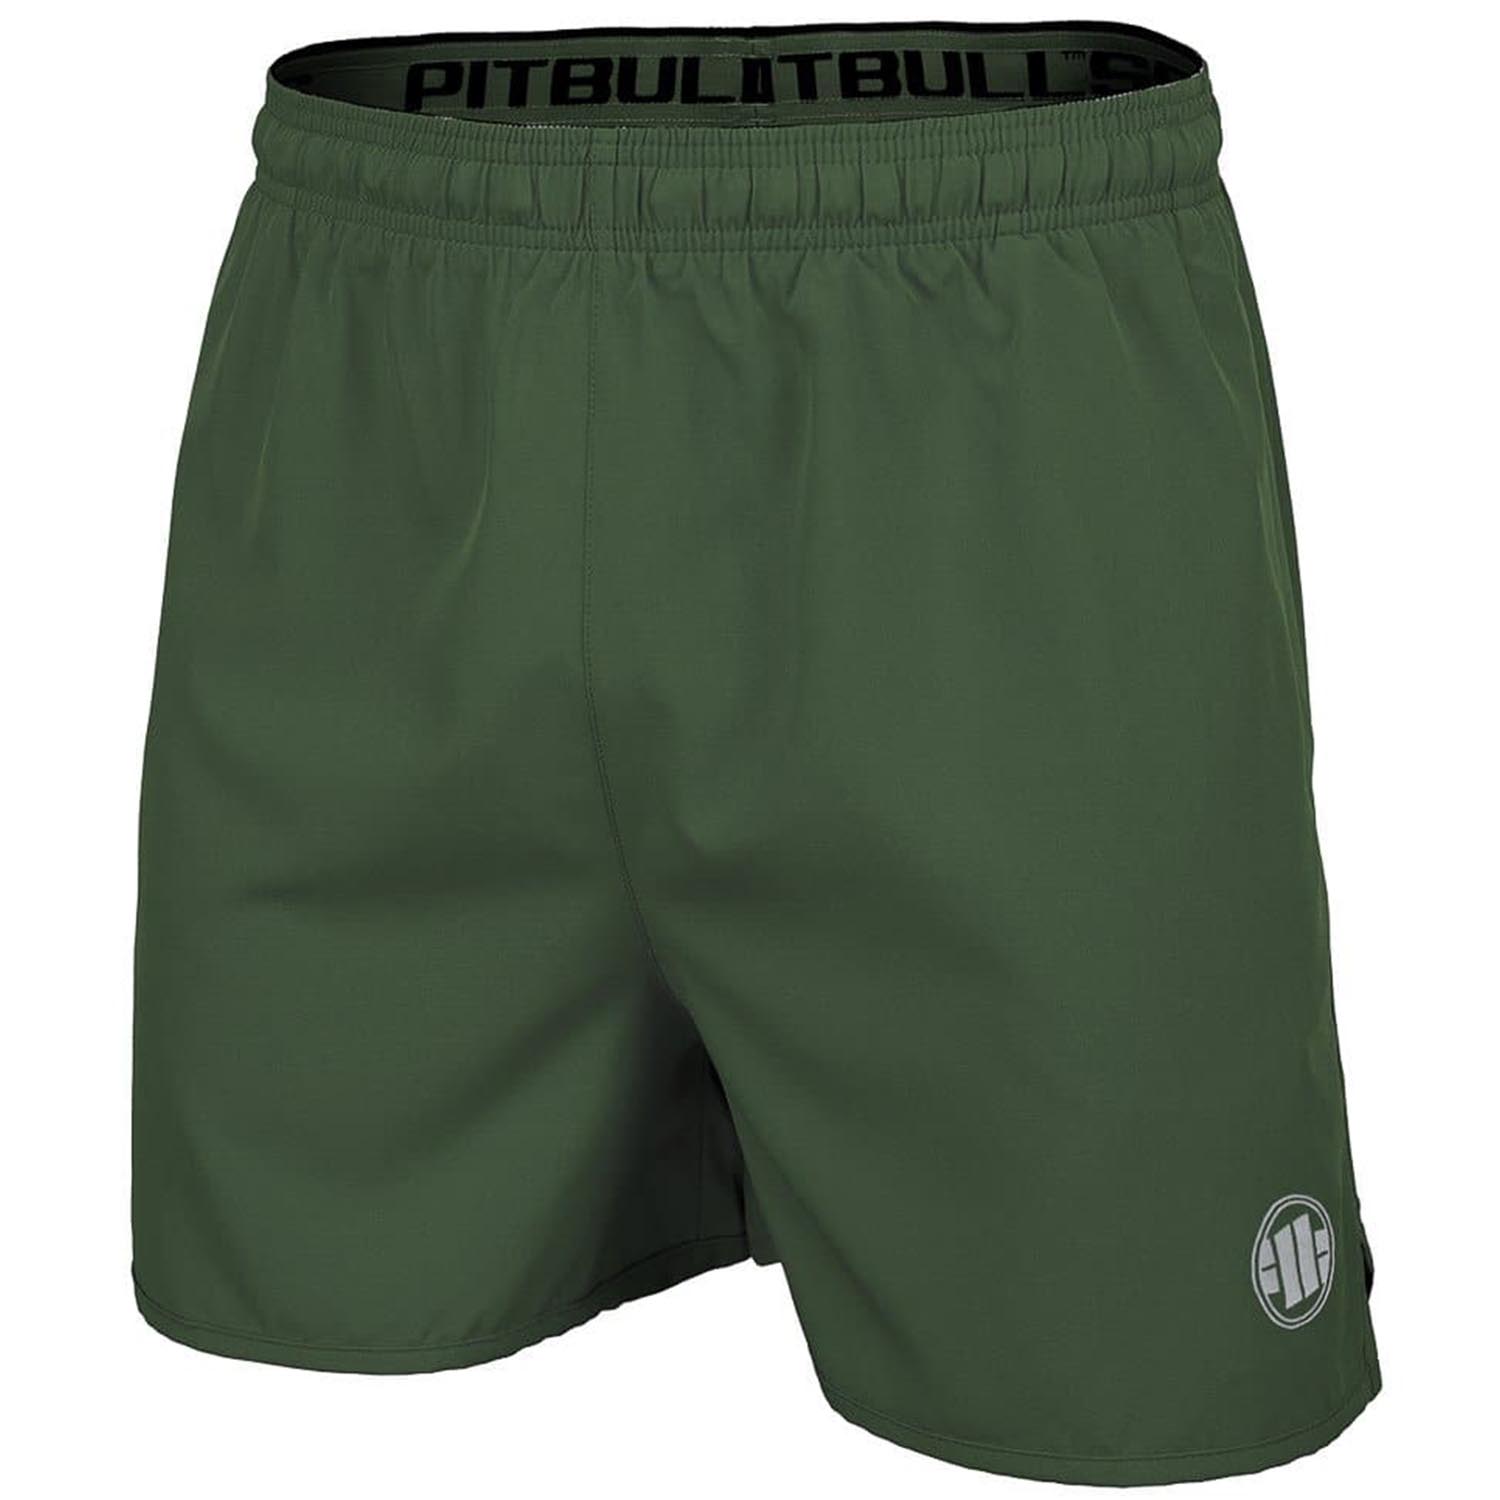 Pit Bull West Coast Fitness Shorts, Small Logo, olive